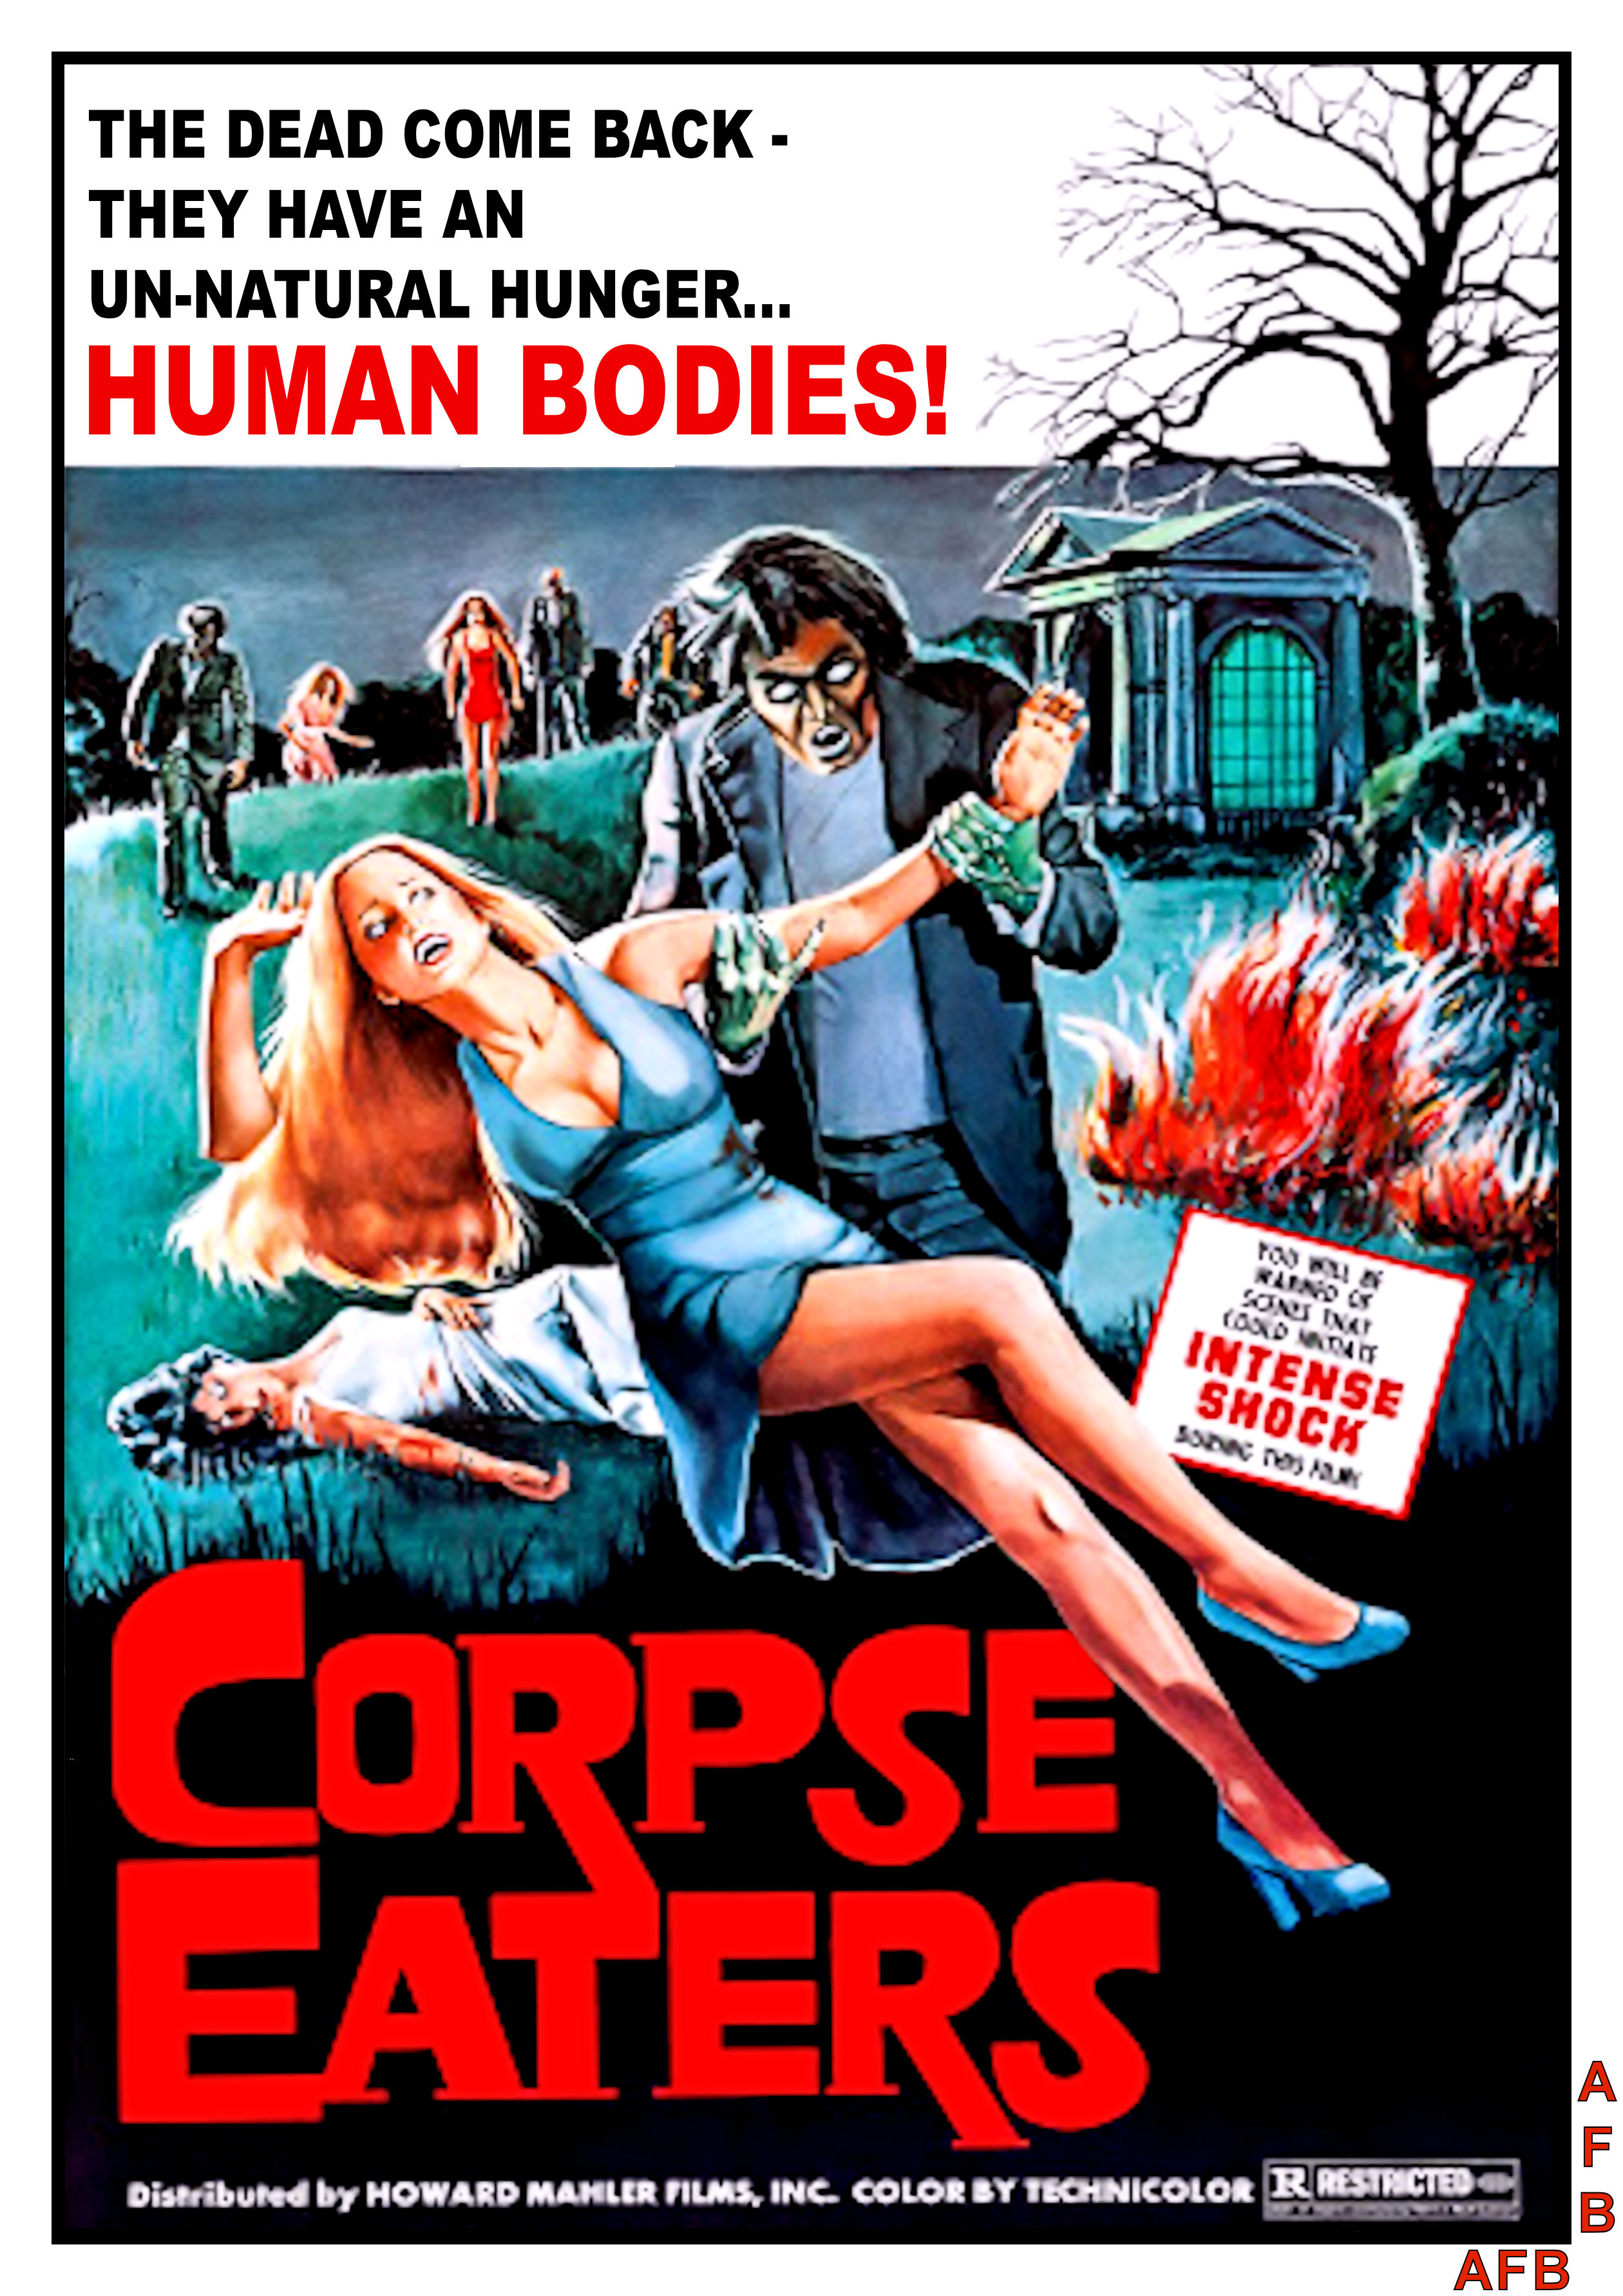 Corpse Eaters (1974) Screenshot 2